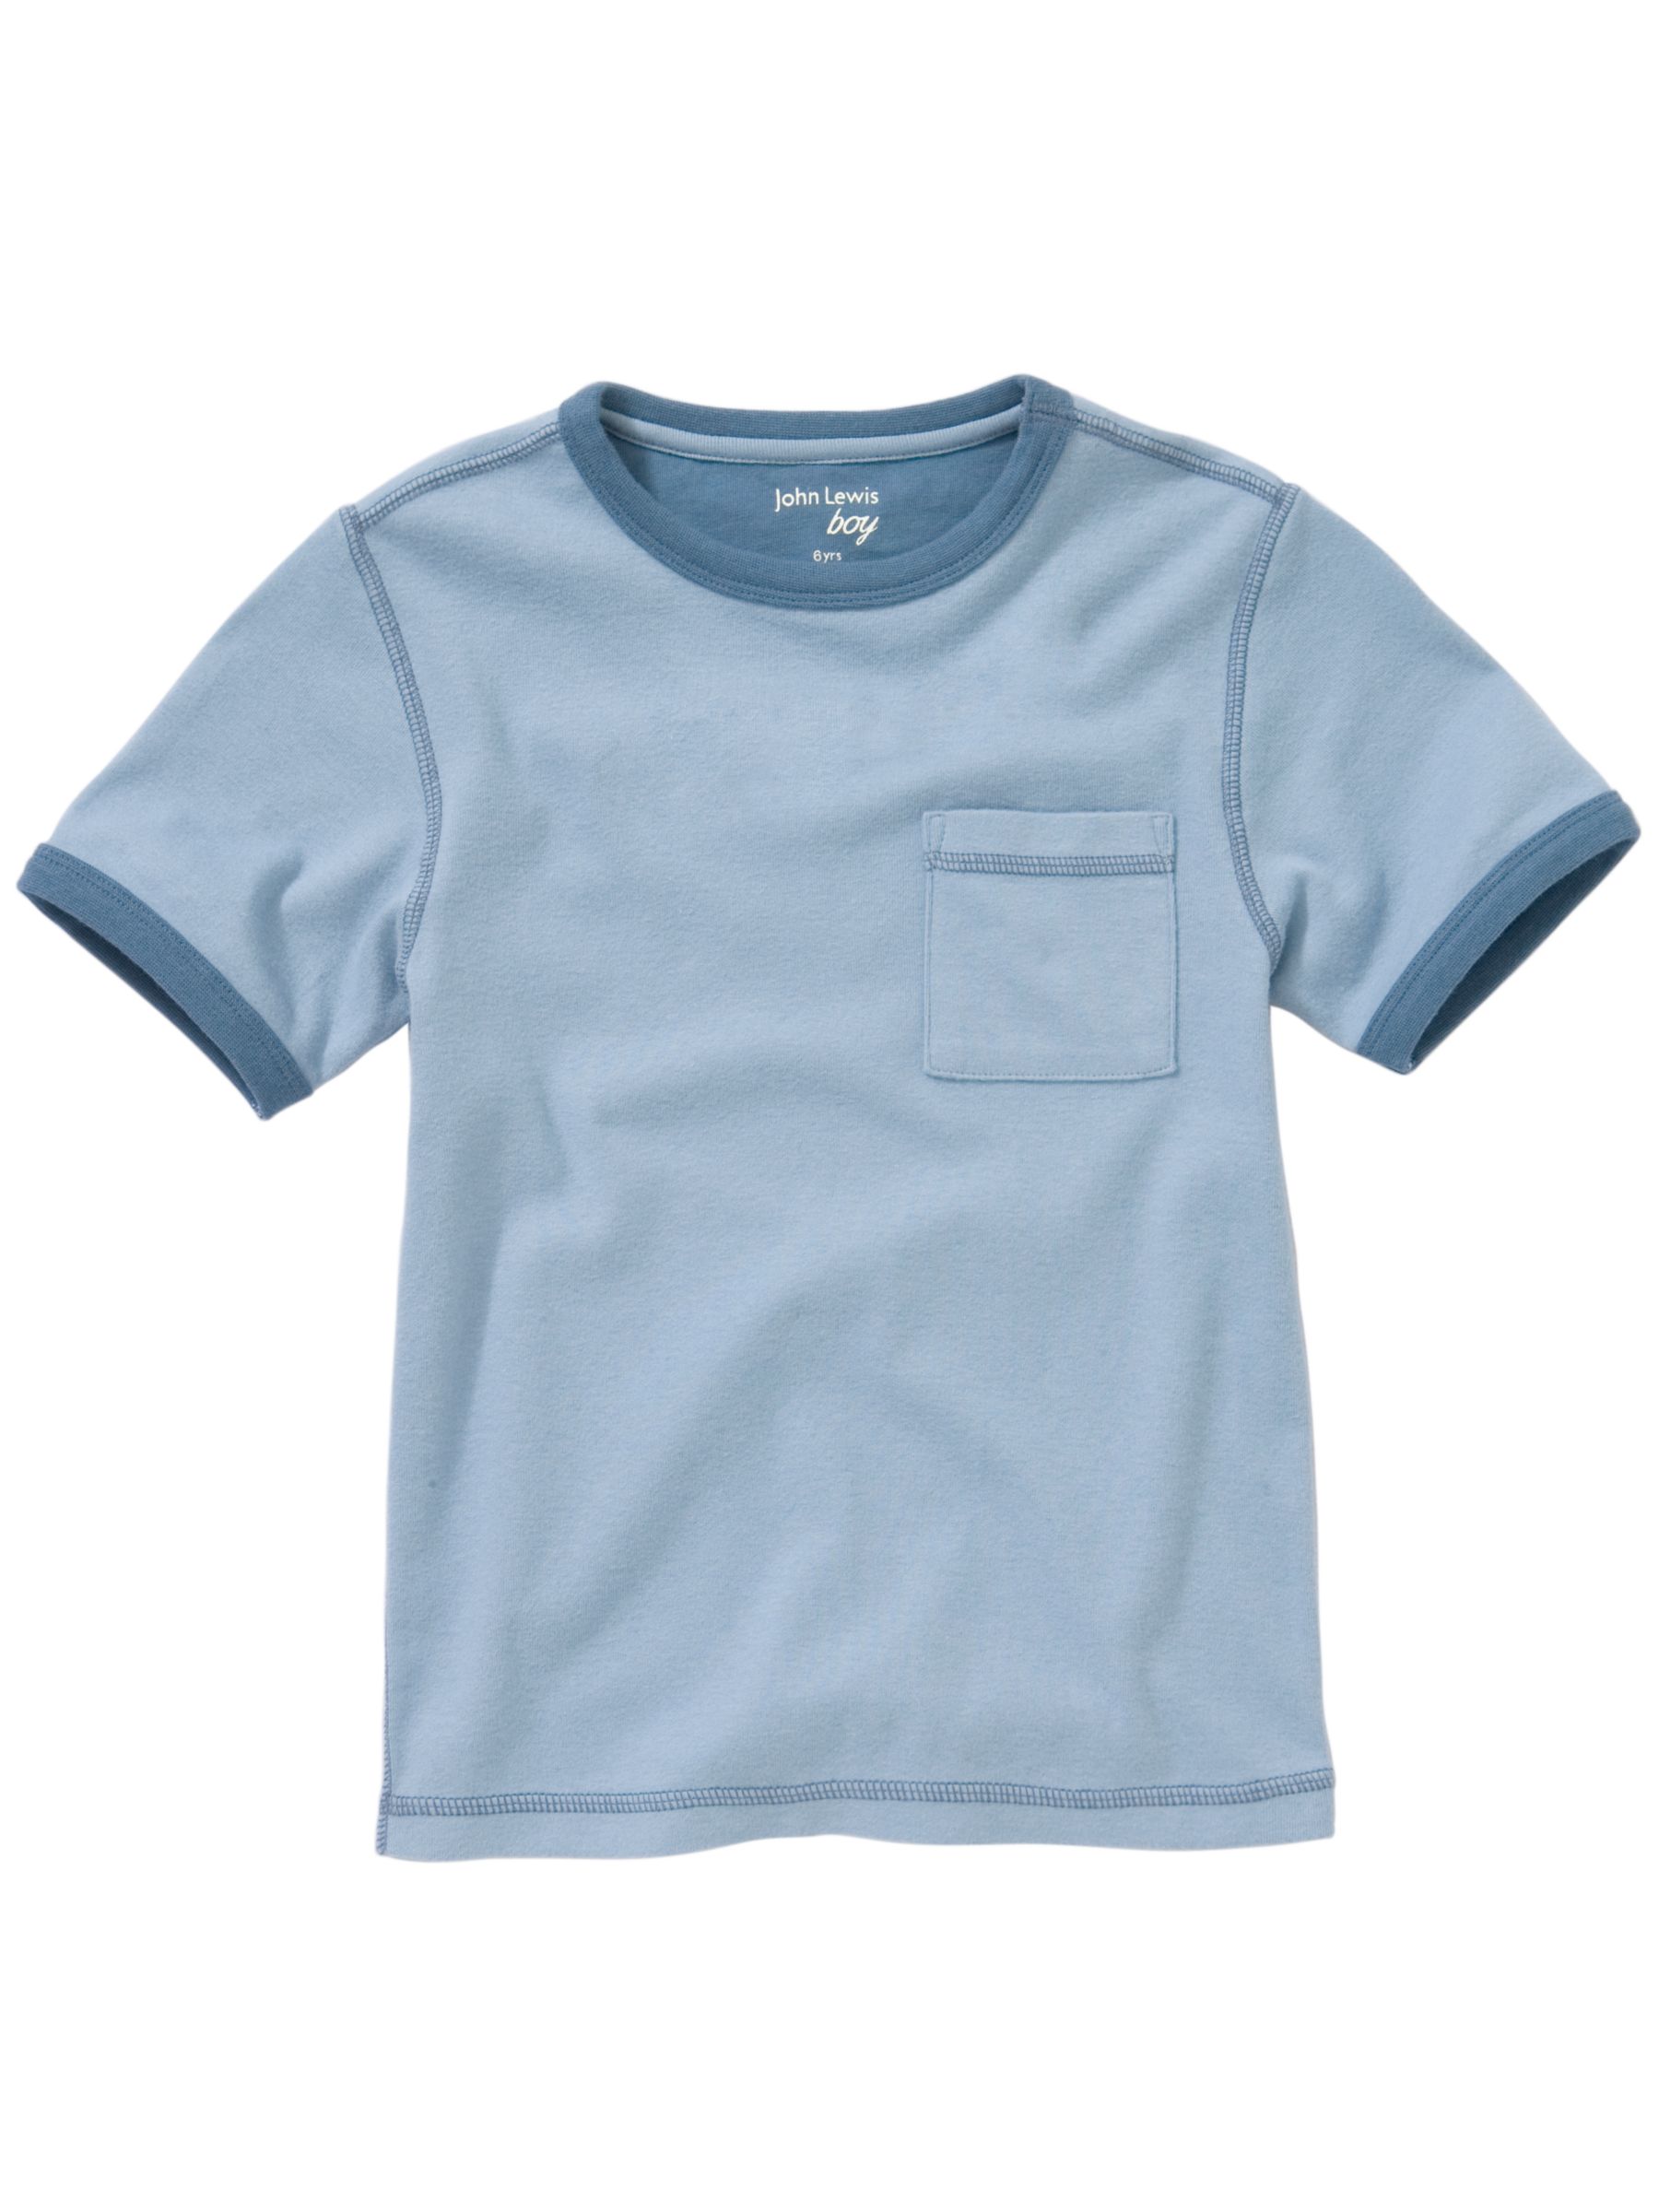 John Lewis Boy Short Sleeve T-Shirt, Blue, 10